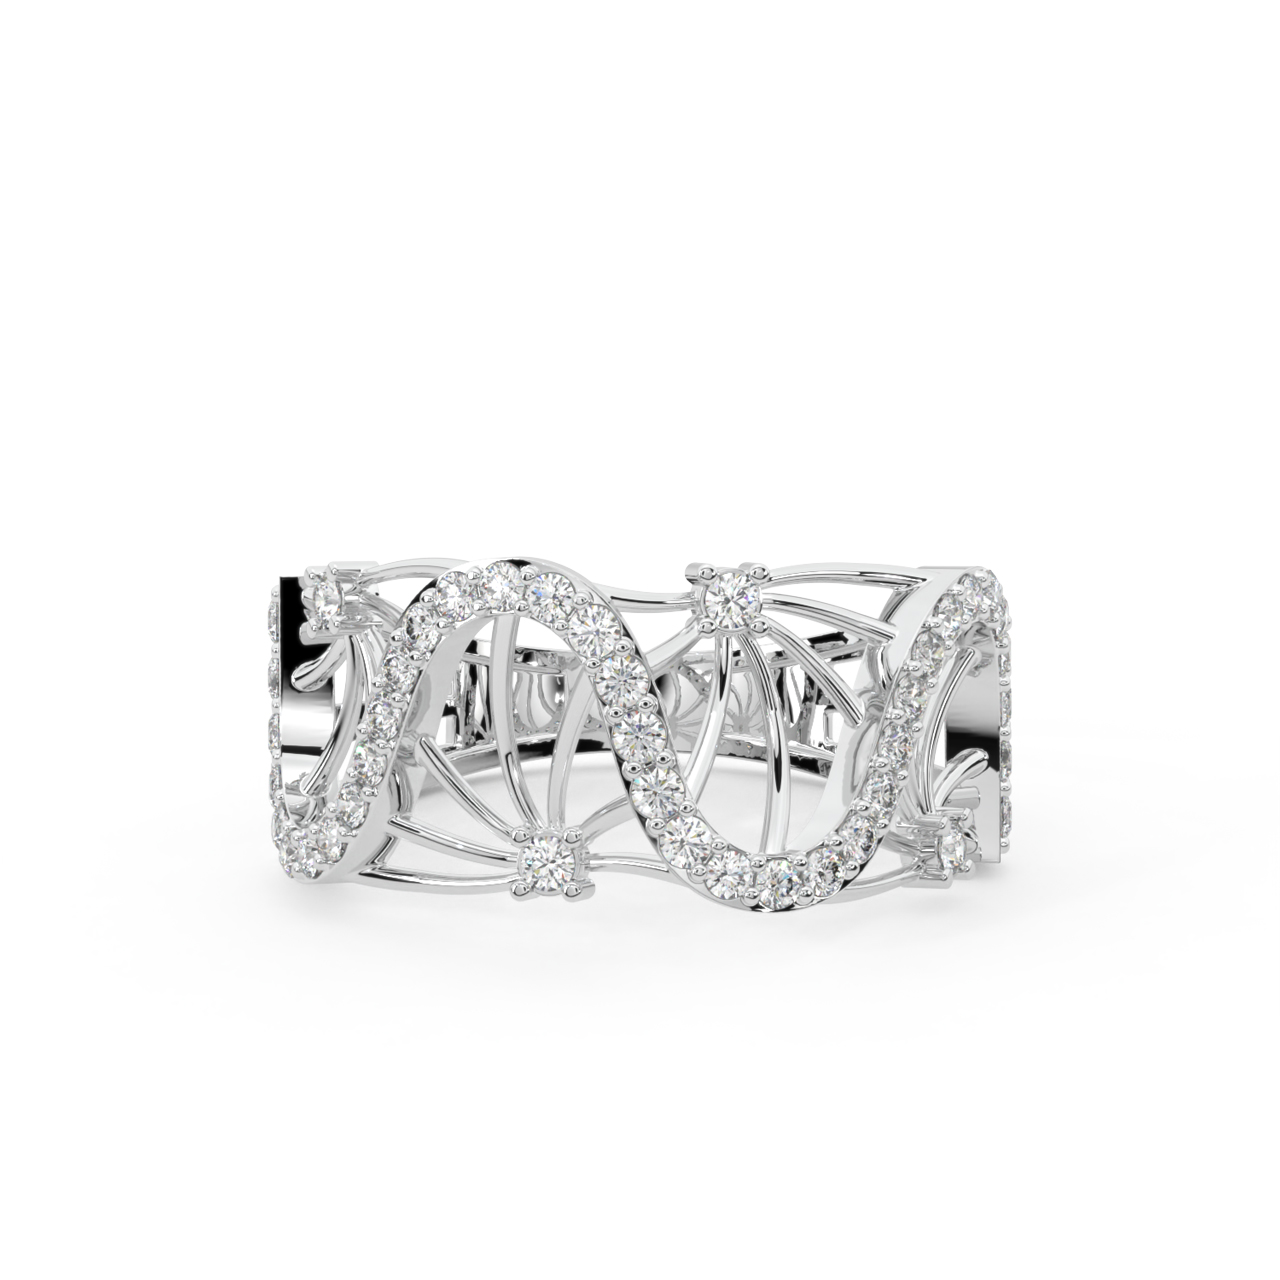 Wavy Style Diamond Engagement Ring